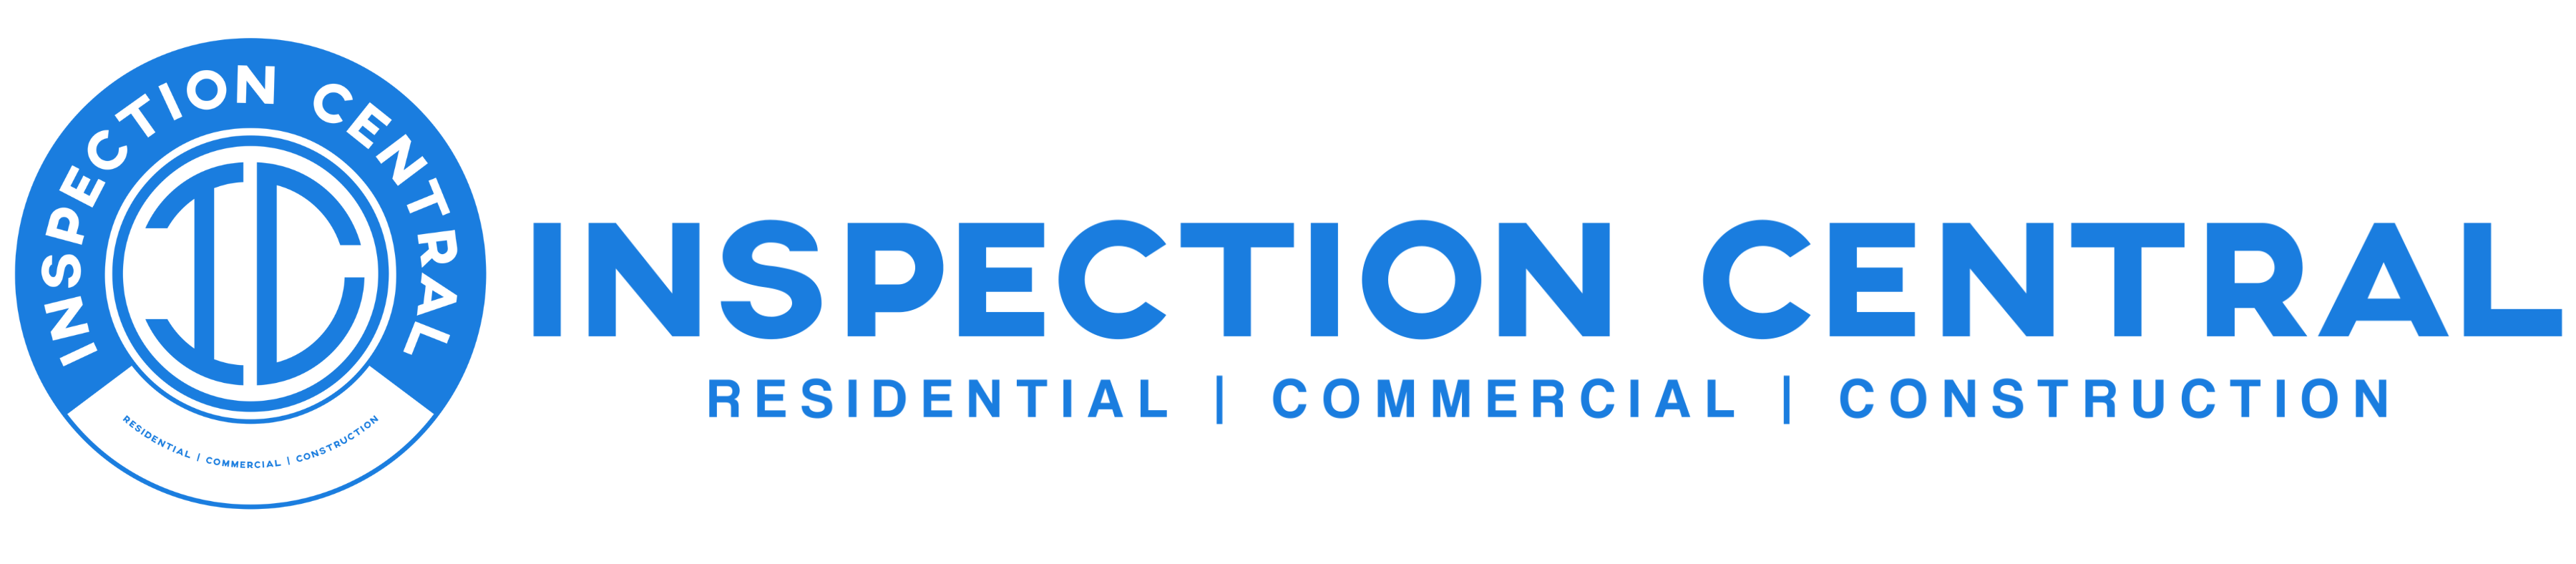 Inspection Central Logo